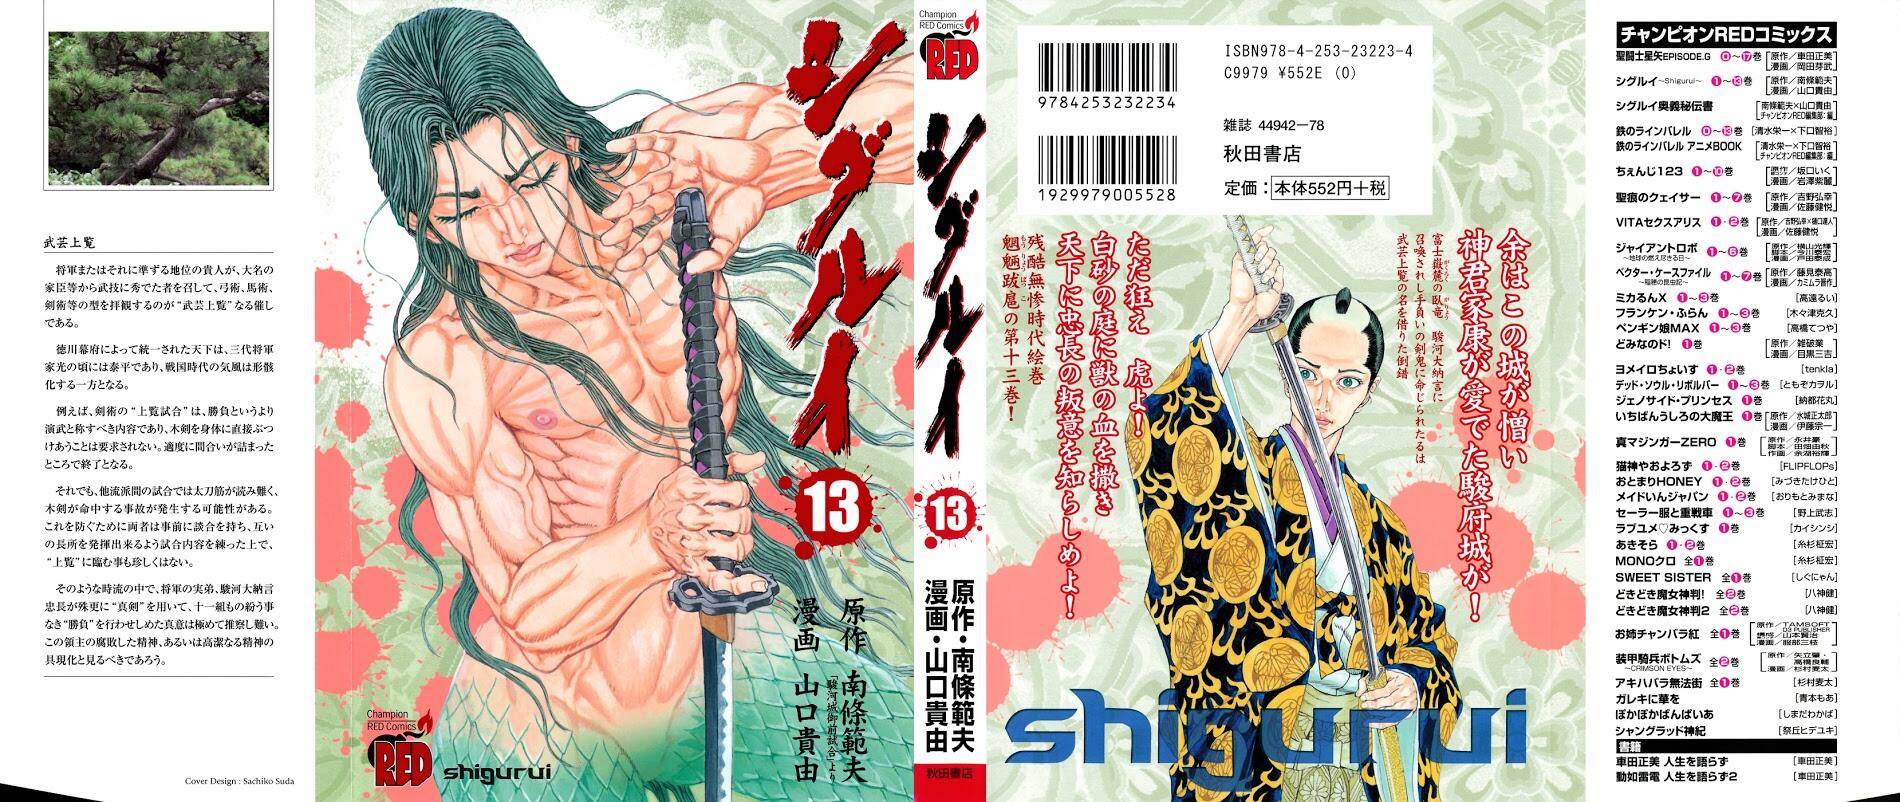 shigurui manga chapter synopsis